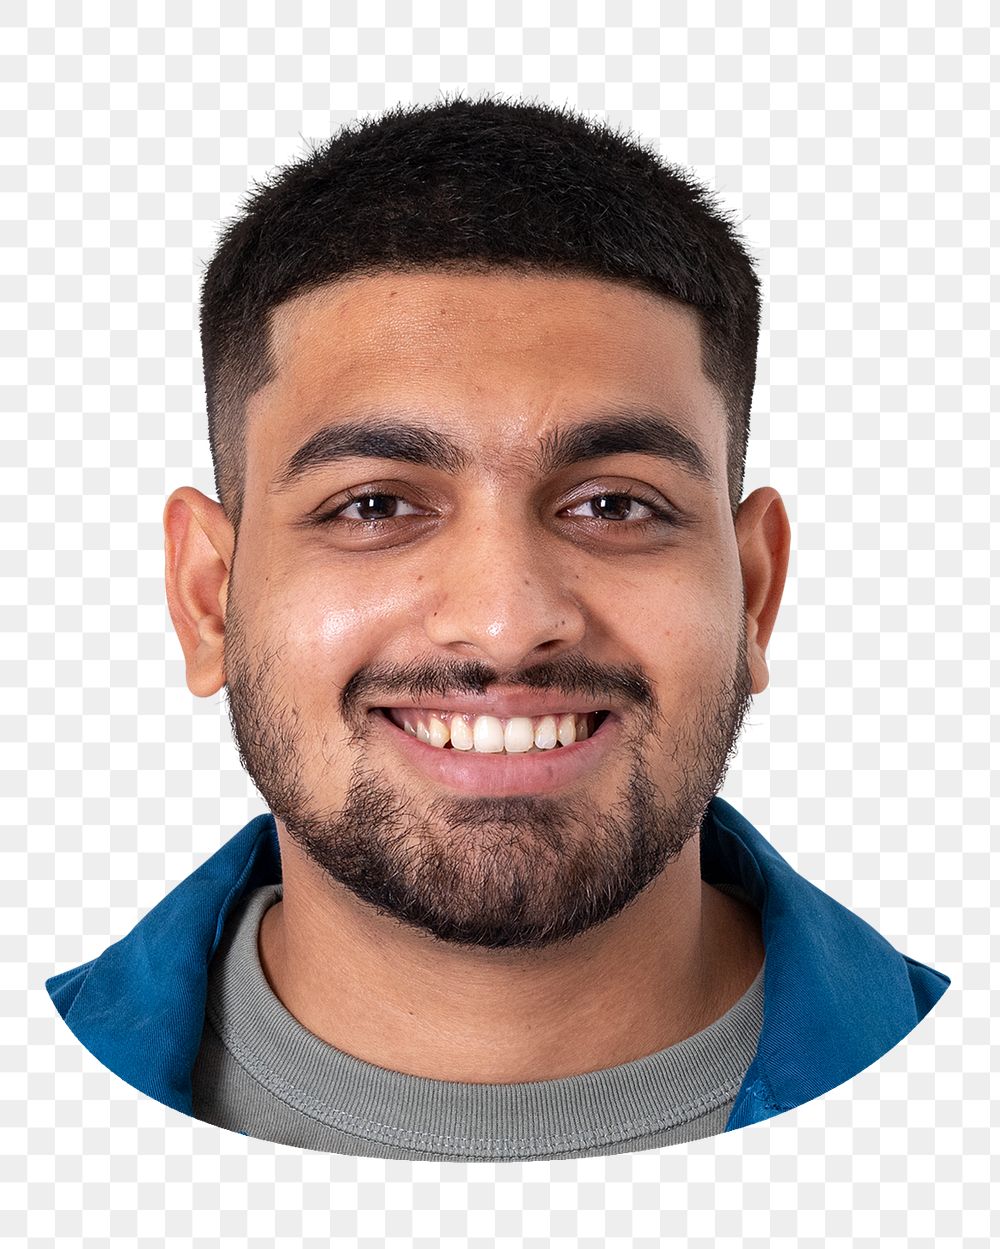 Indian man png smiling face portrait on transparent background